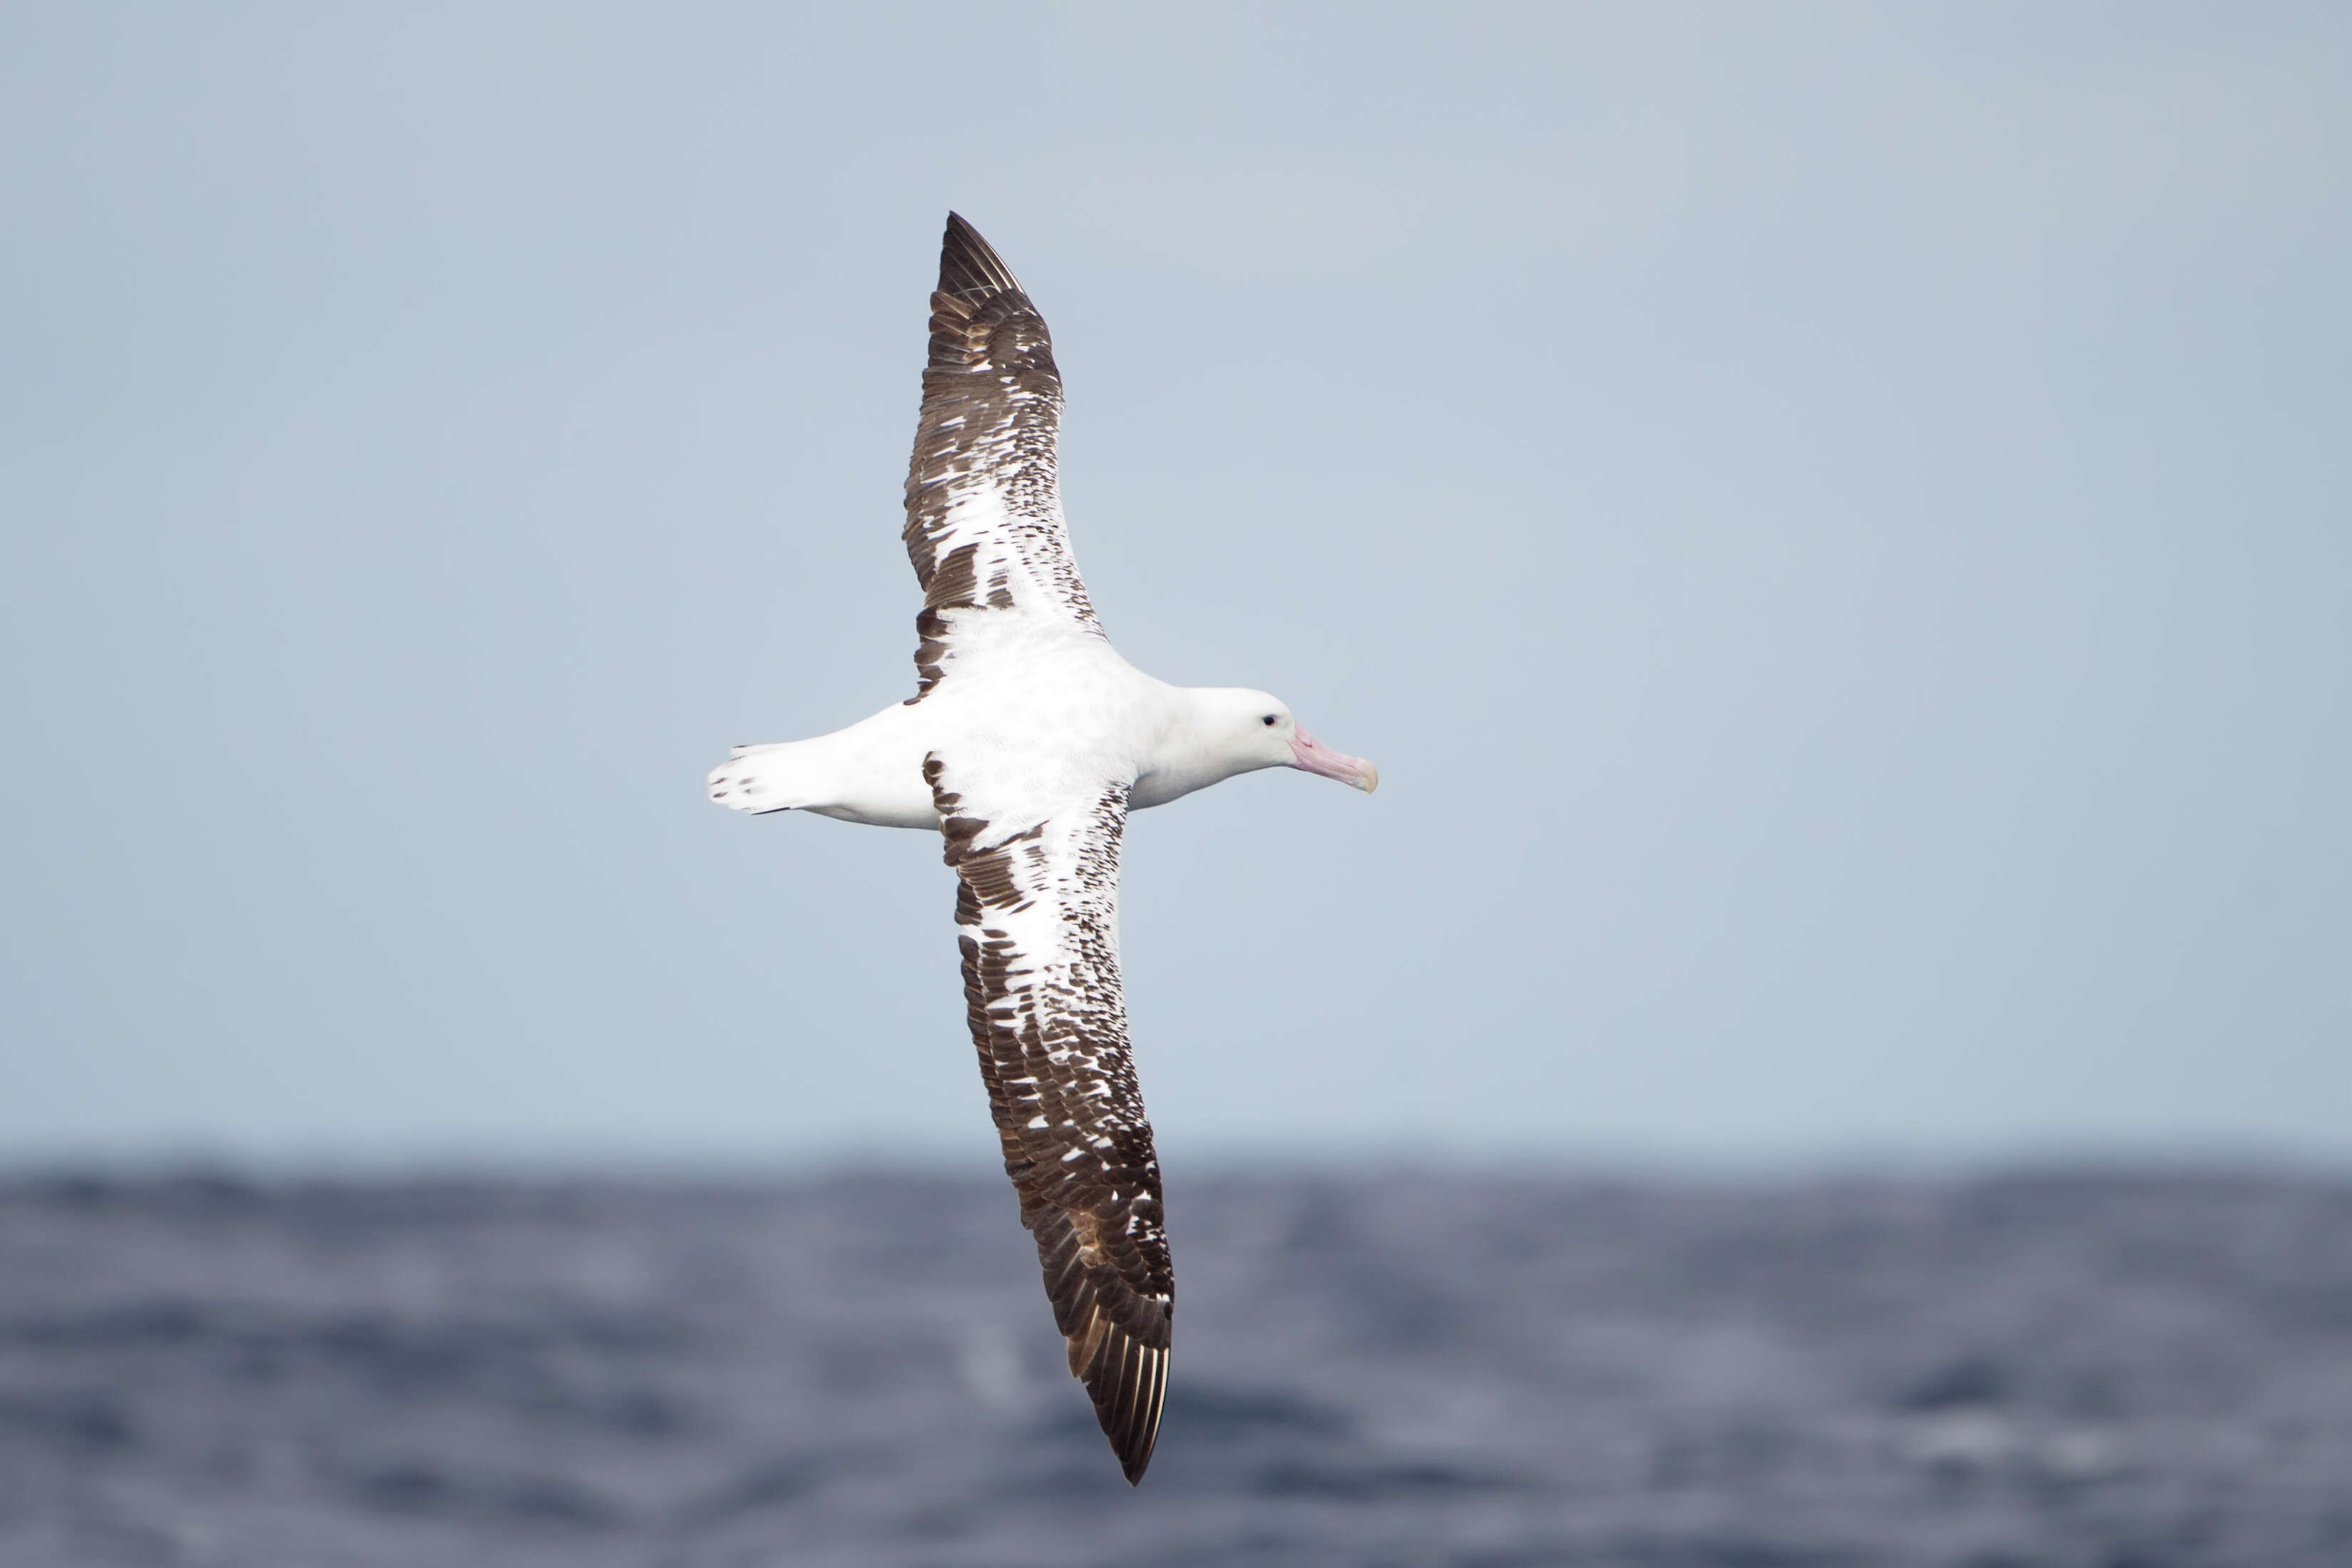 antipod albatrosu resmi